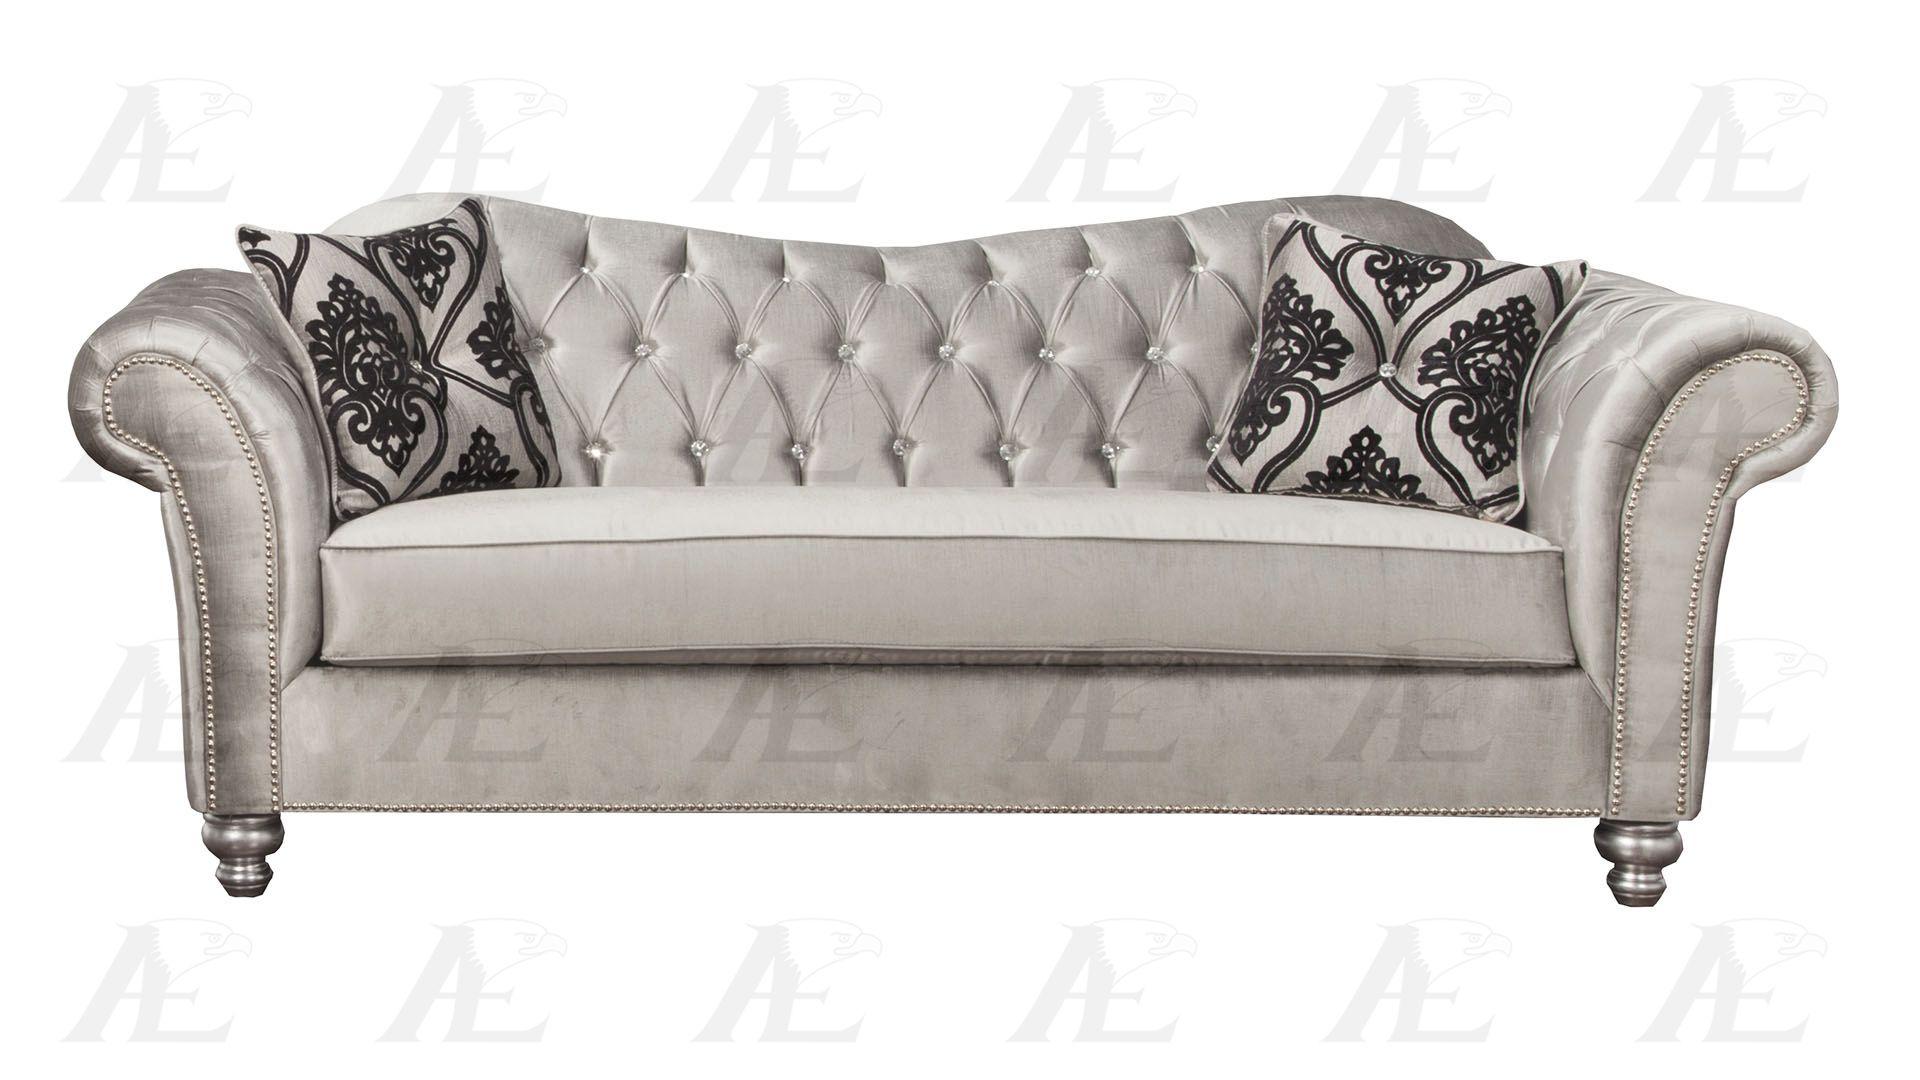 

    
American Eagle Furniture AE2600-S Silver Tufted Sofa  Fabric Contemporary
